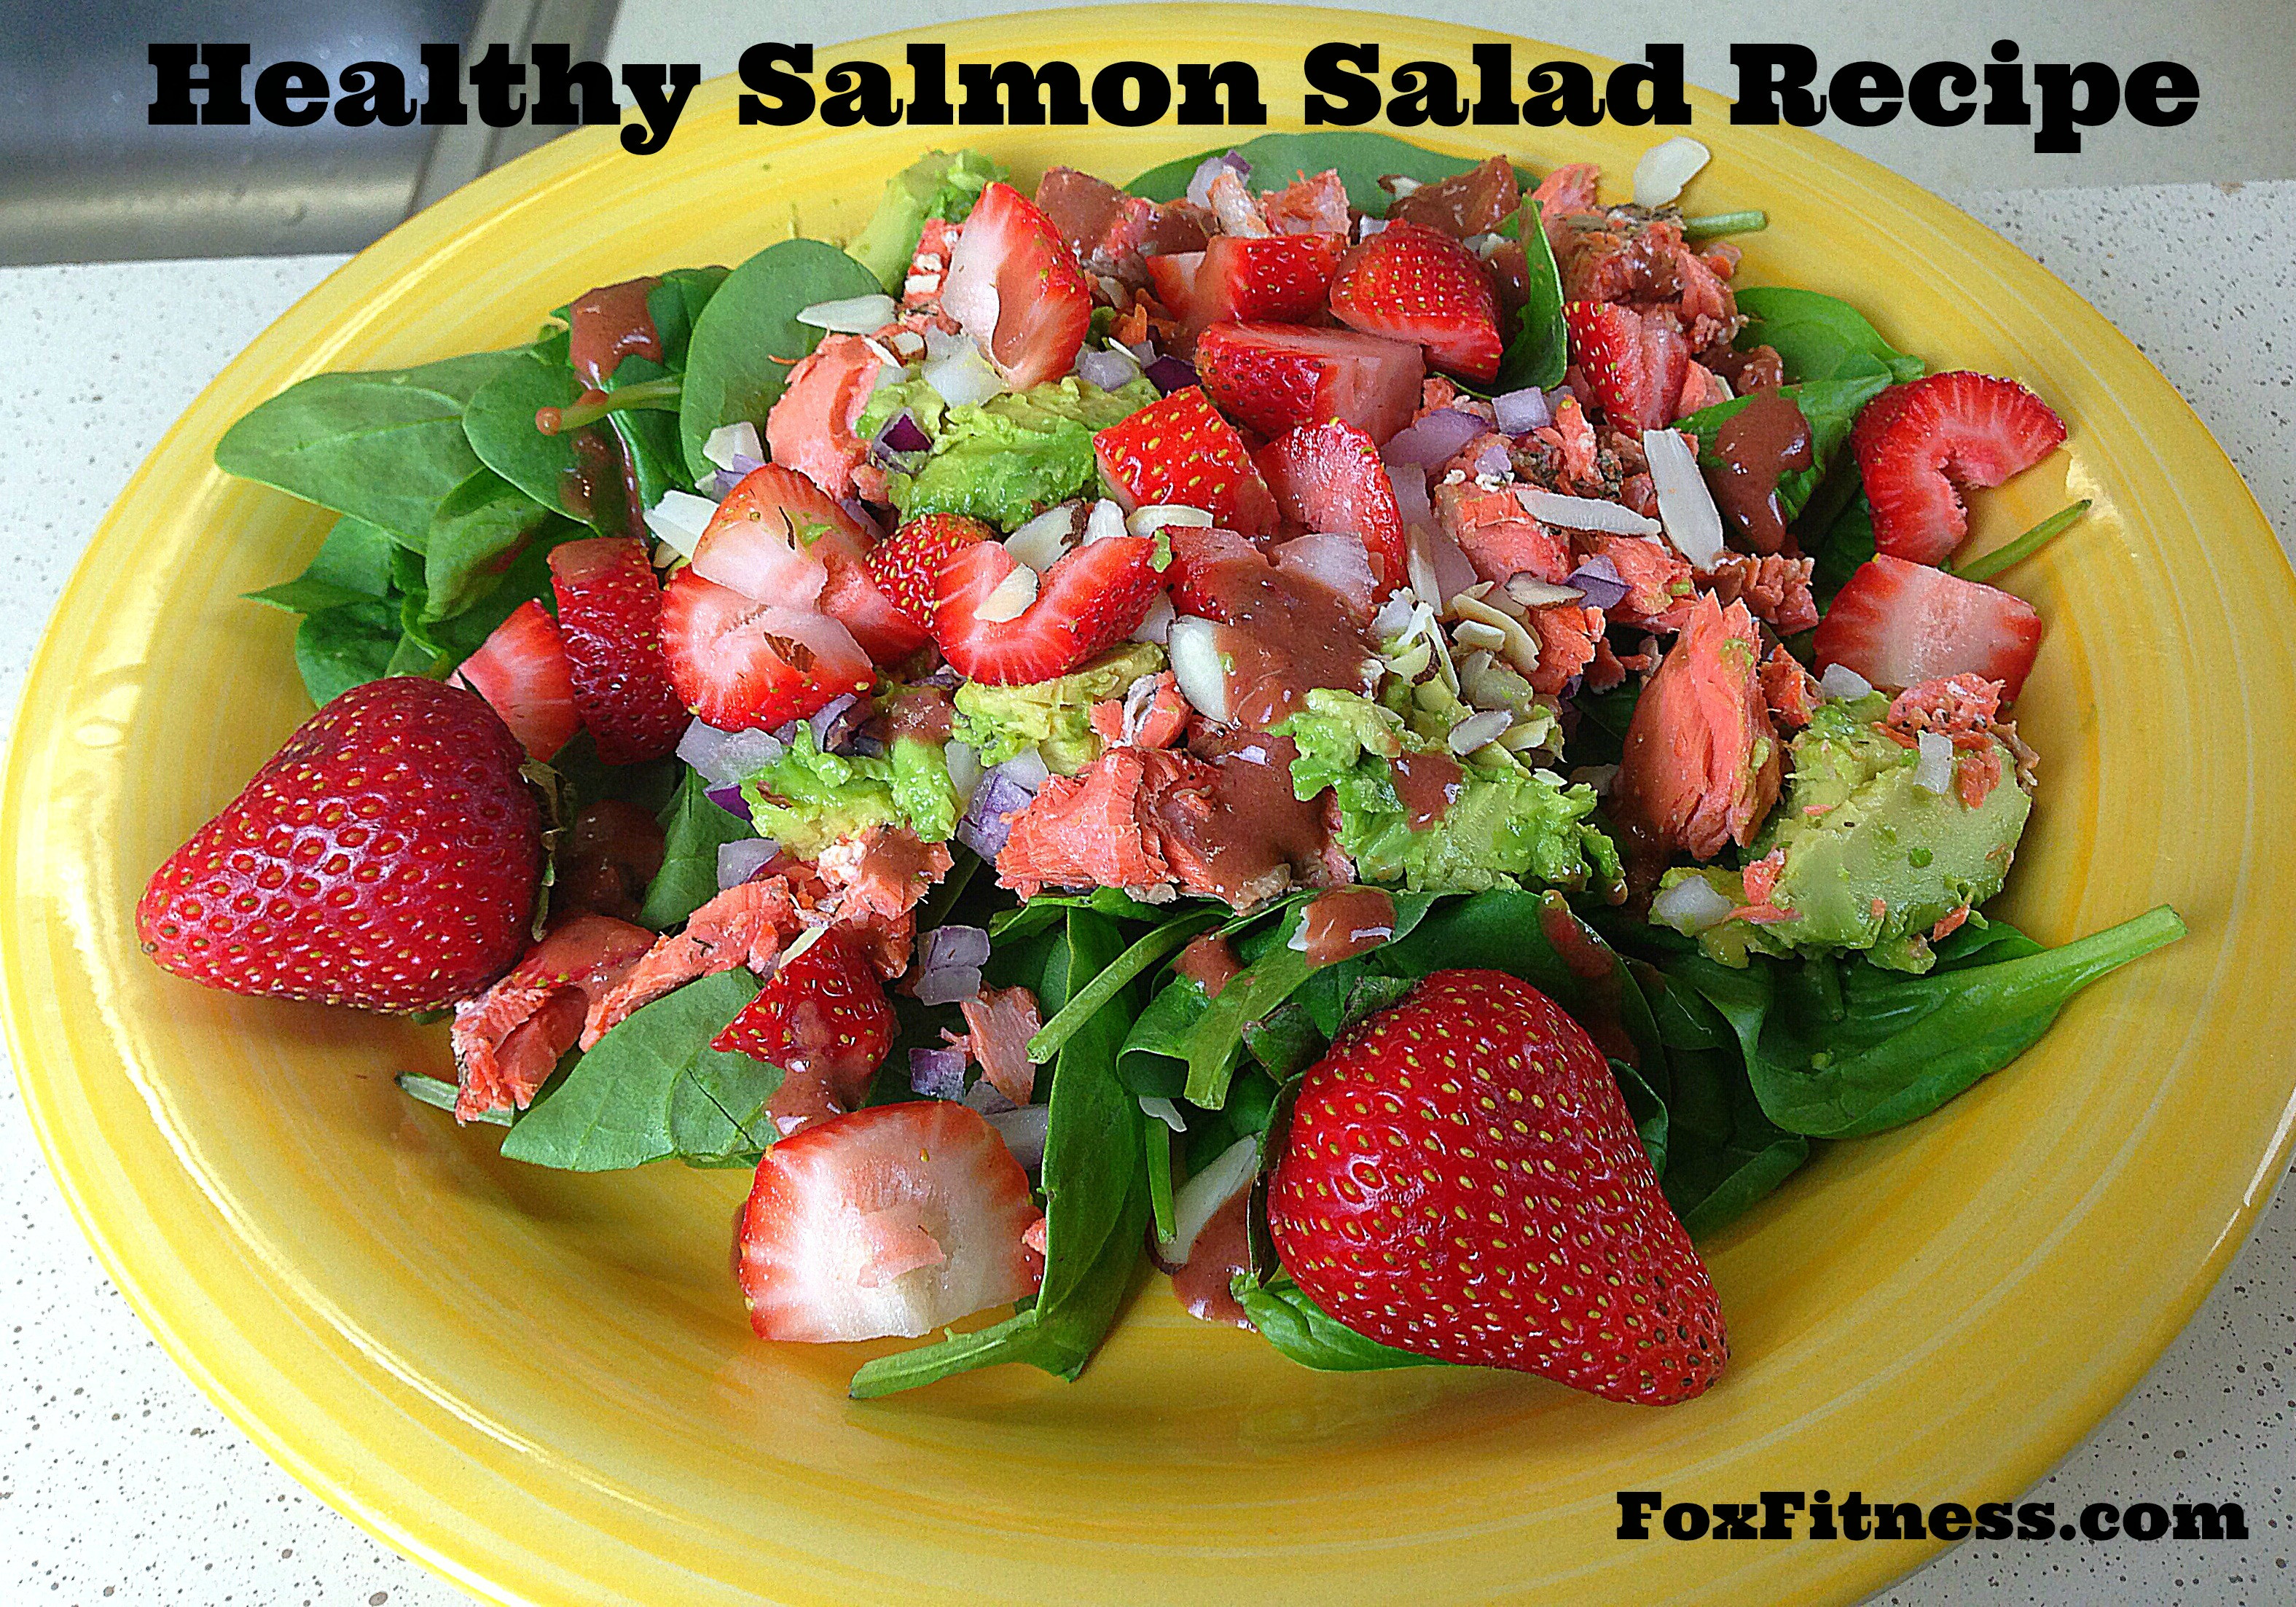 Salmon Salad Recipes Healthy
 Healthy Salmon Salad Recipe